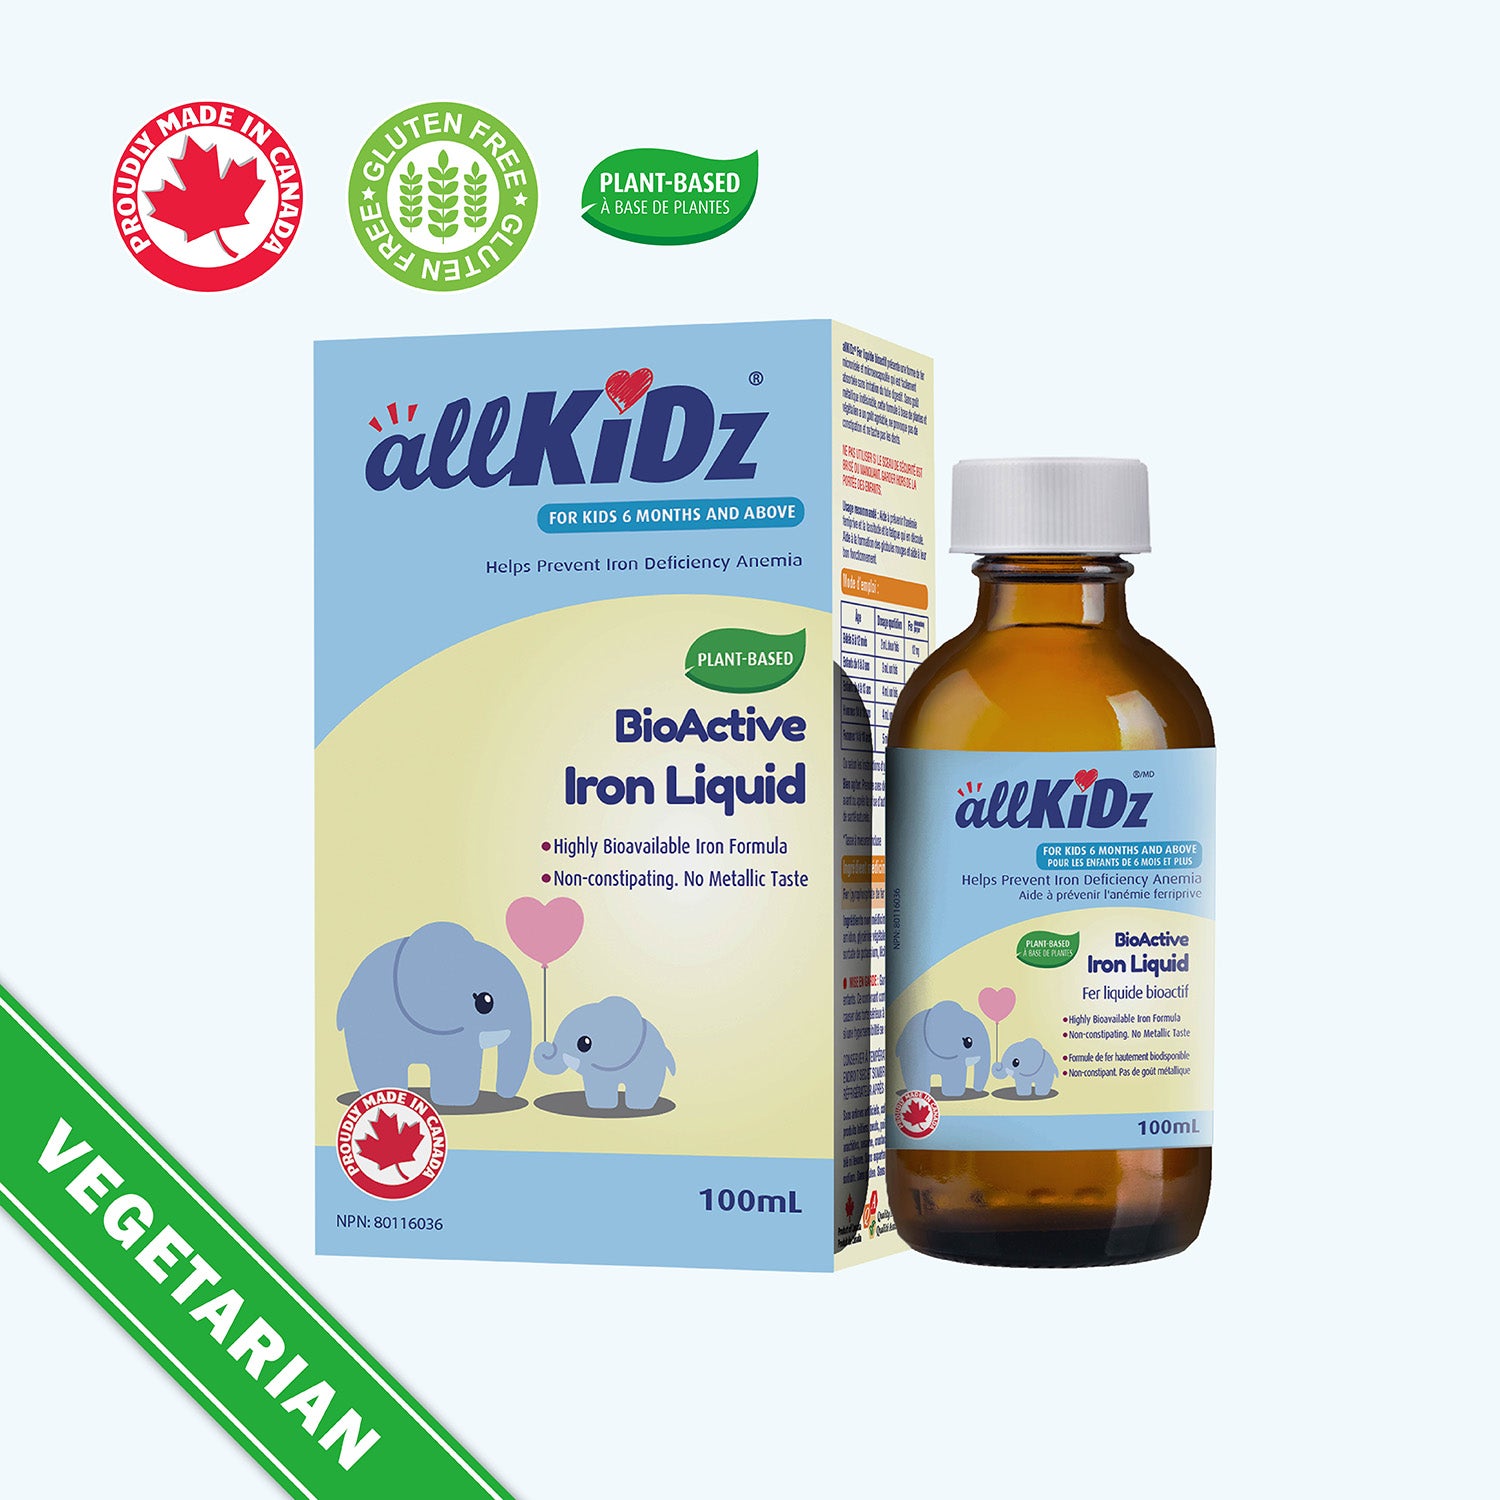 allKiDz 生物活性鐵液 (100 mL)